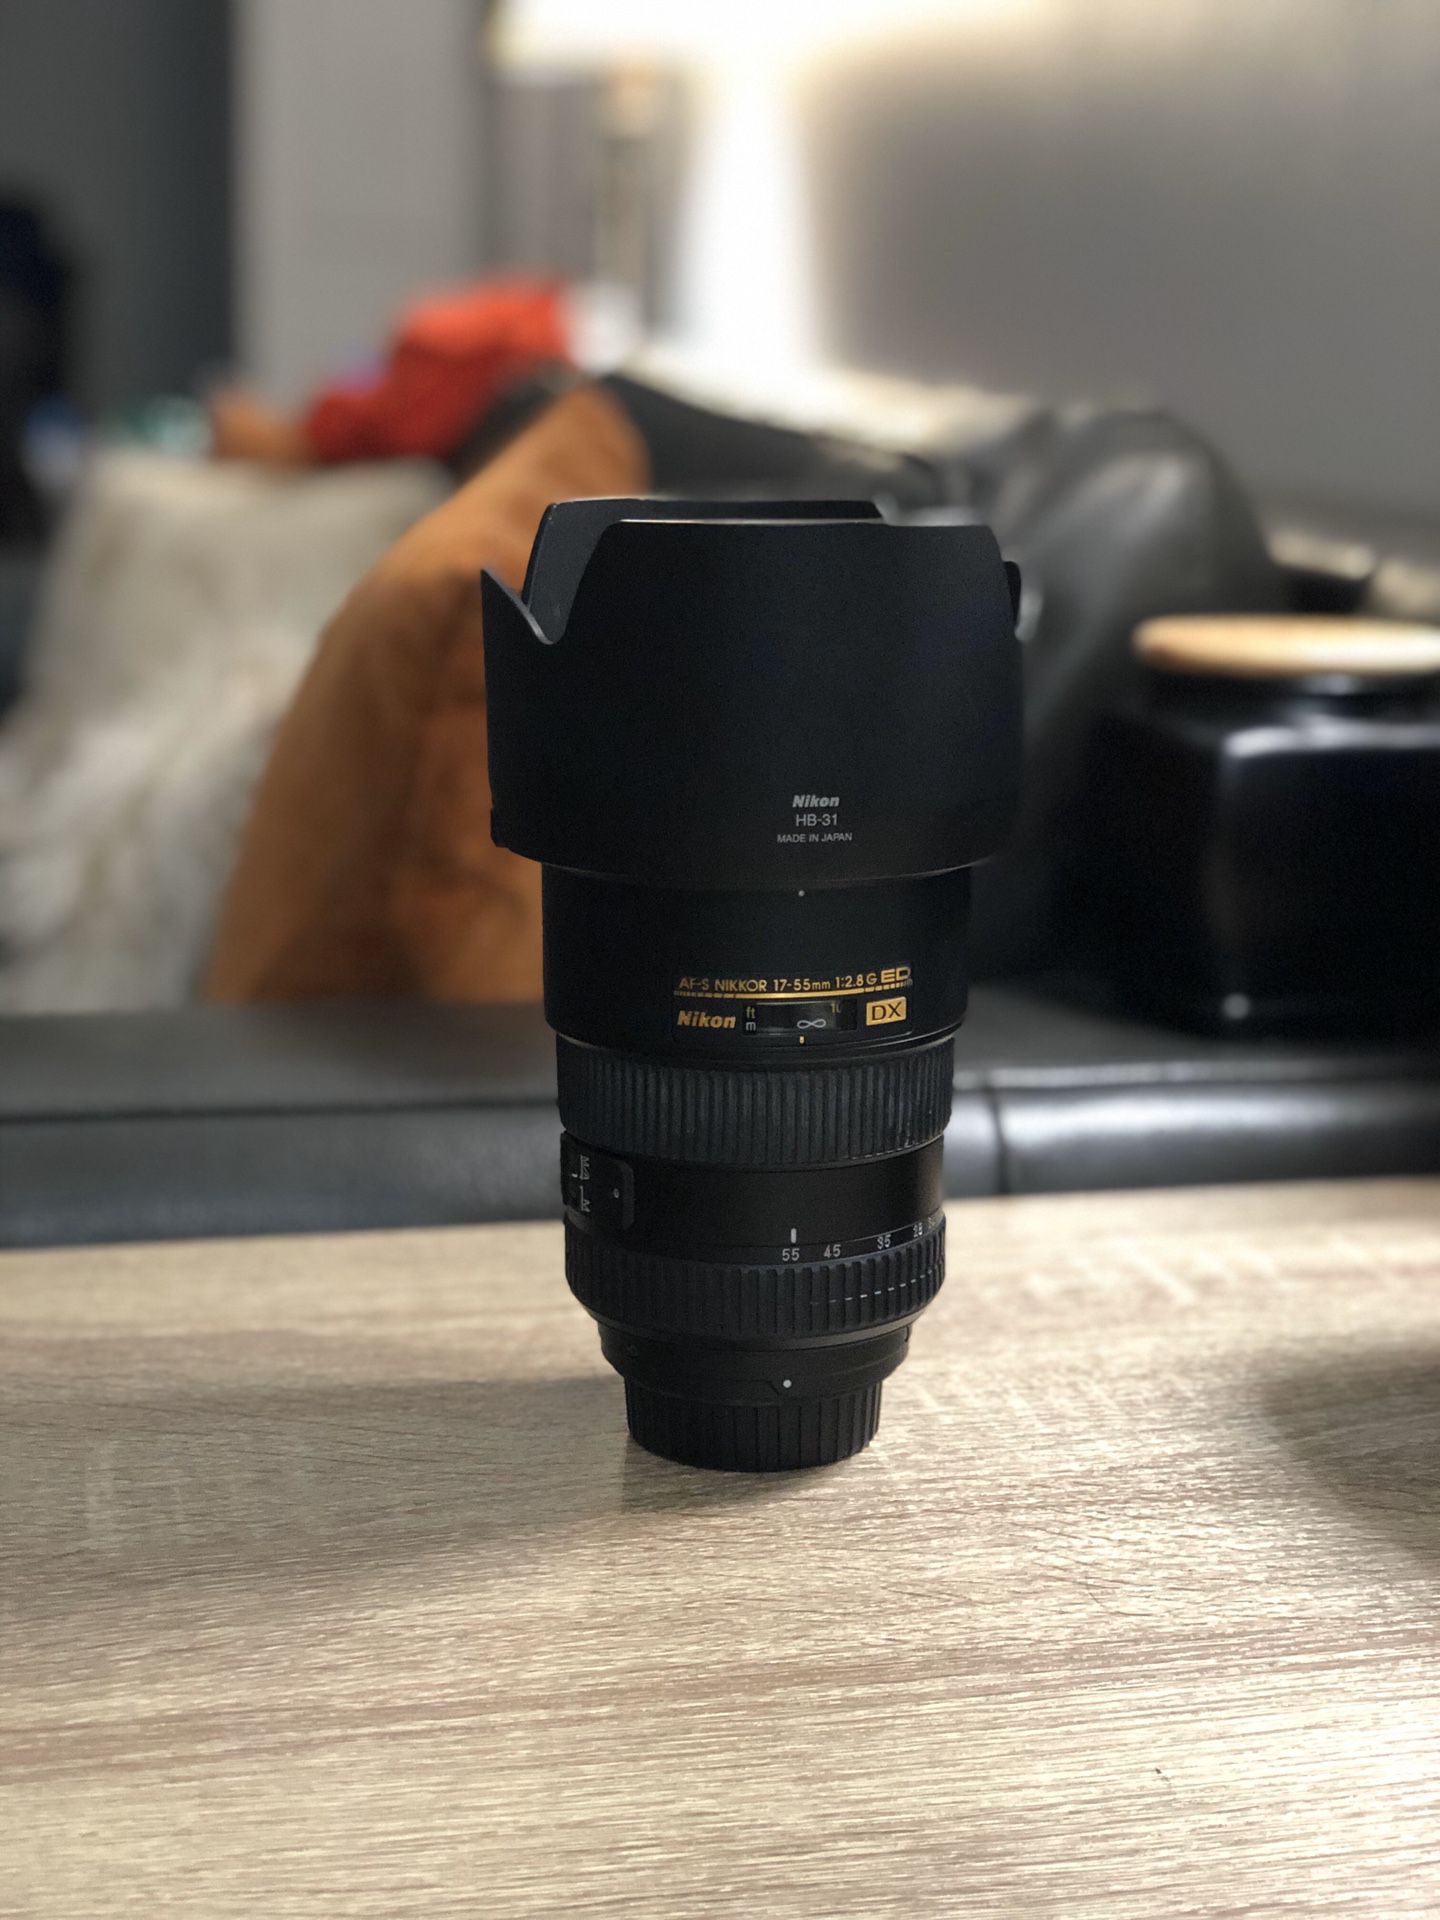 Nikon 17-55mm 2.8G DX lens